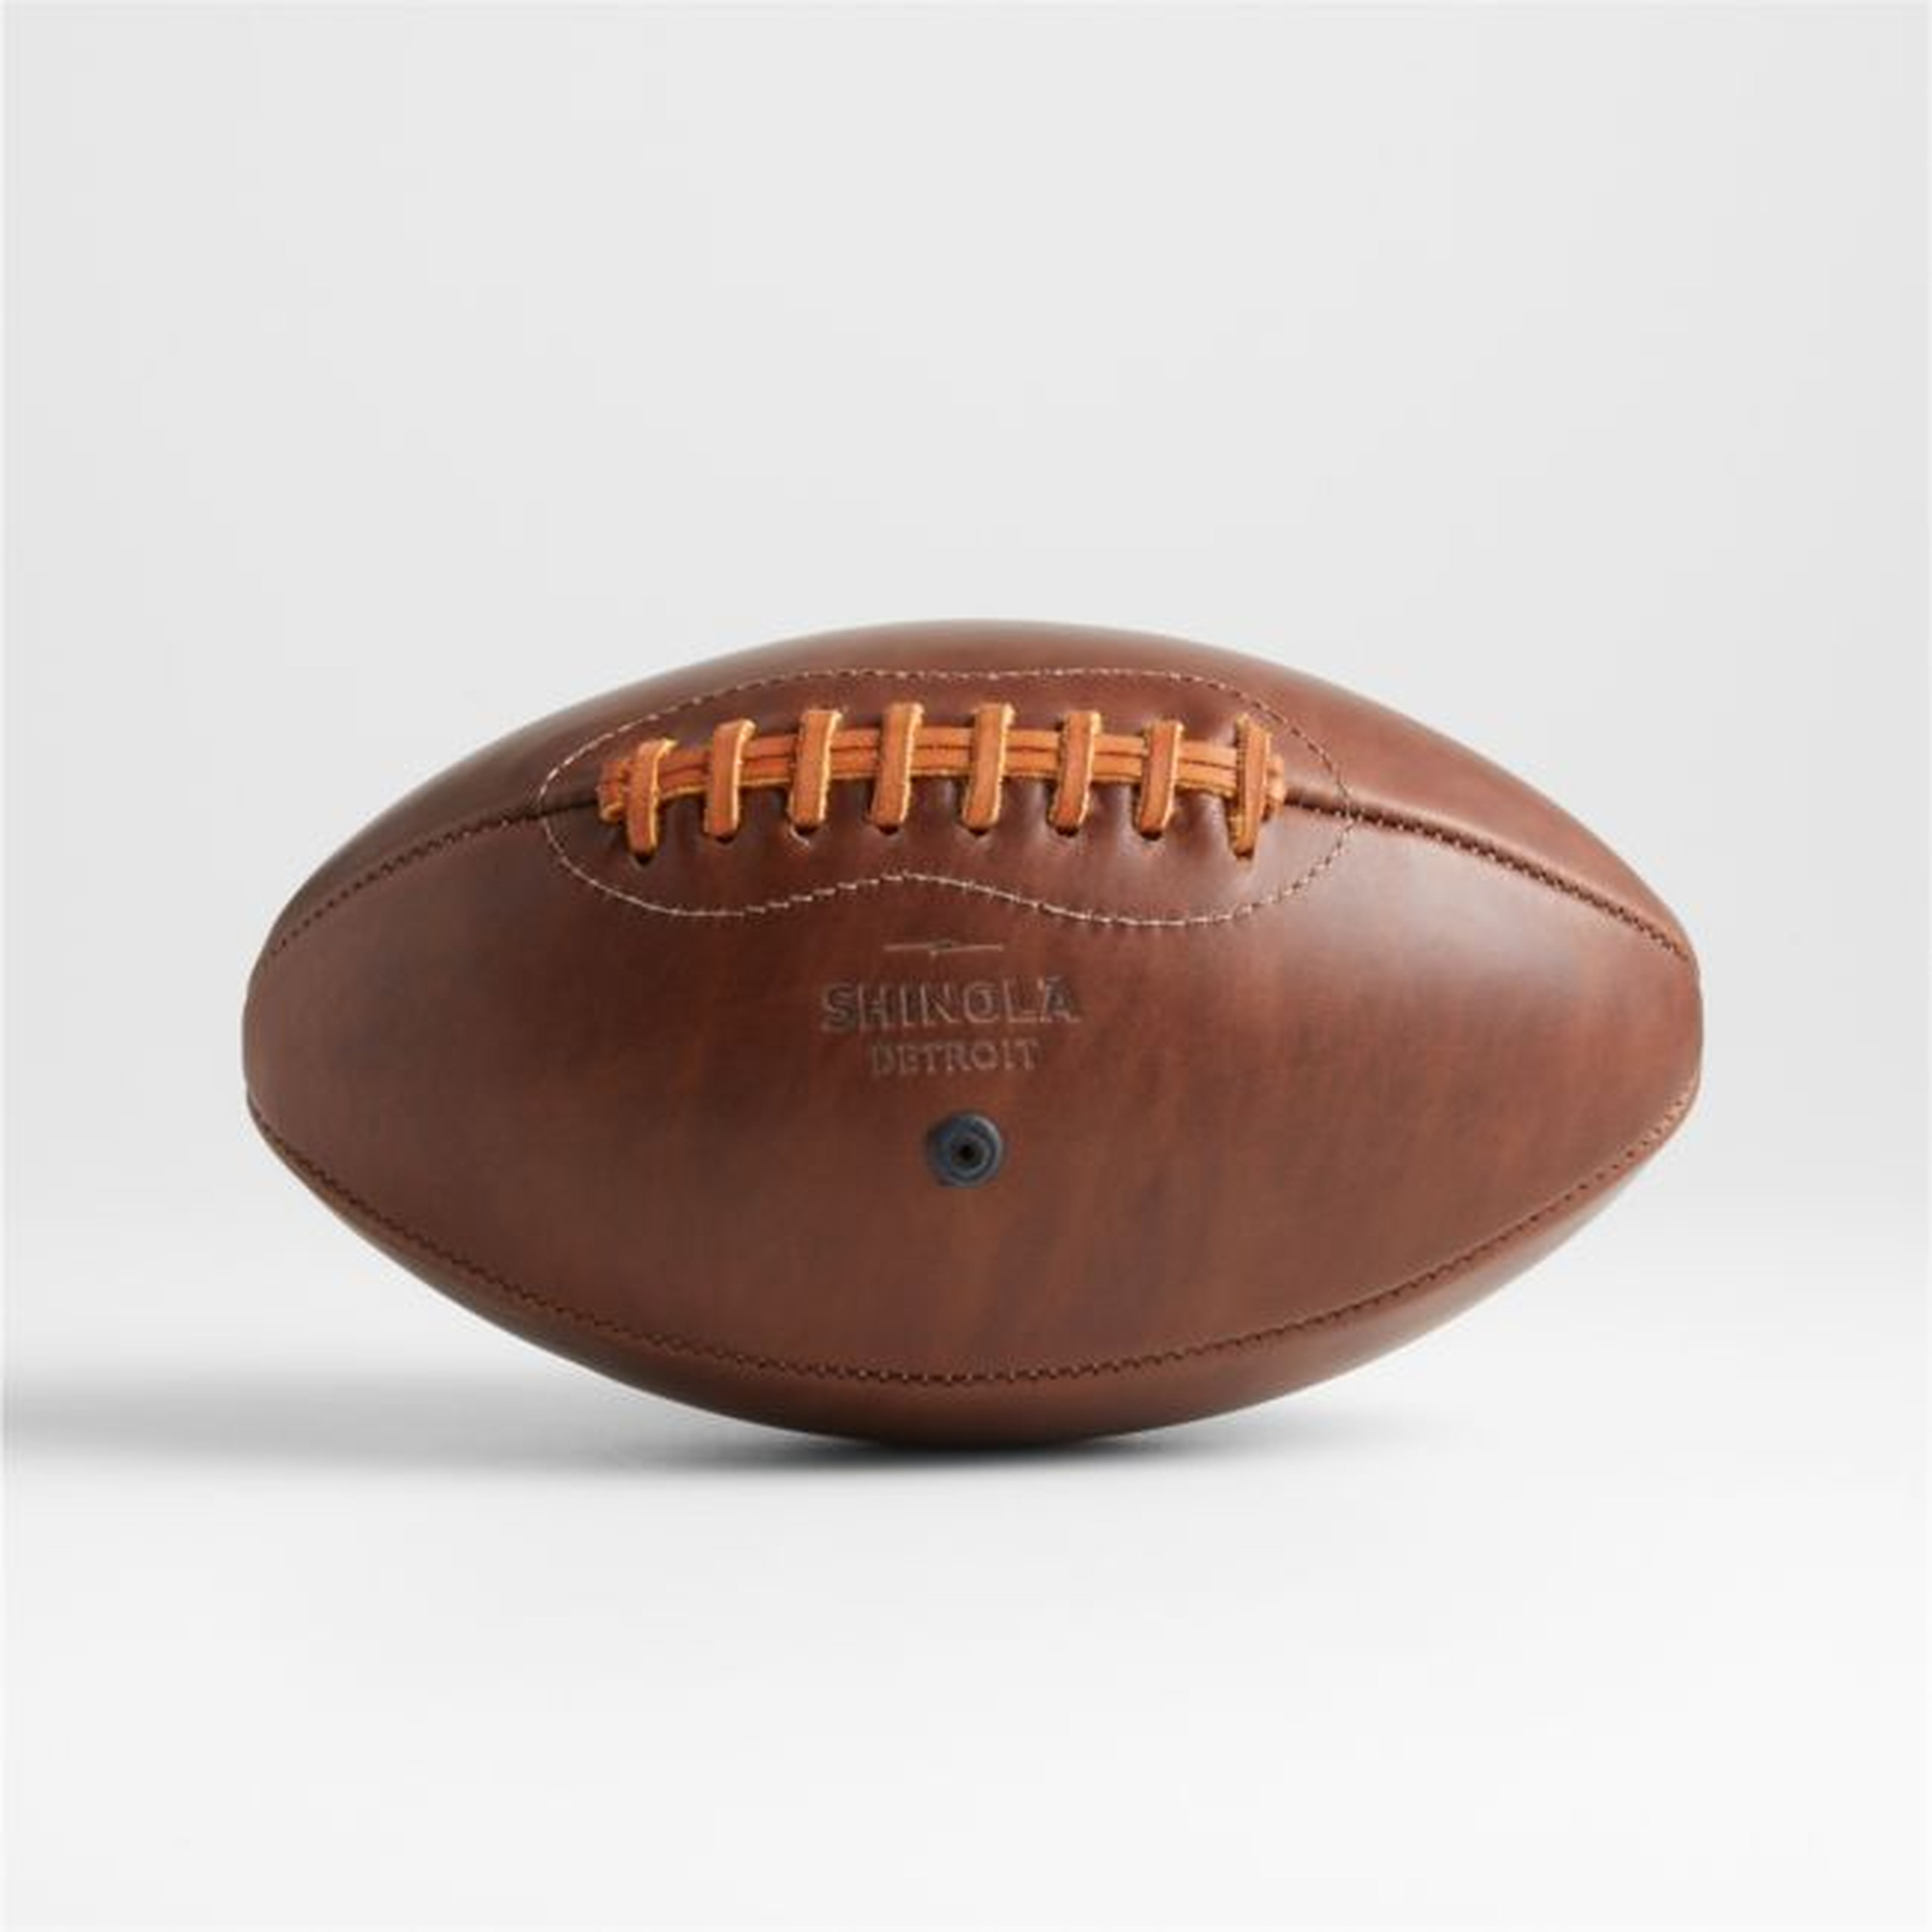 Shinola Leather Football - Crate and Barrel